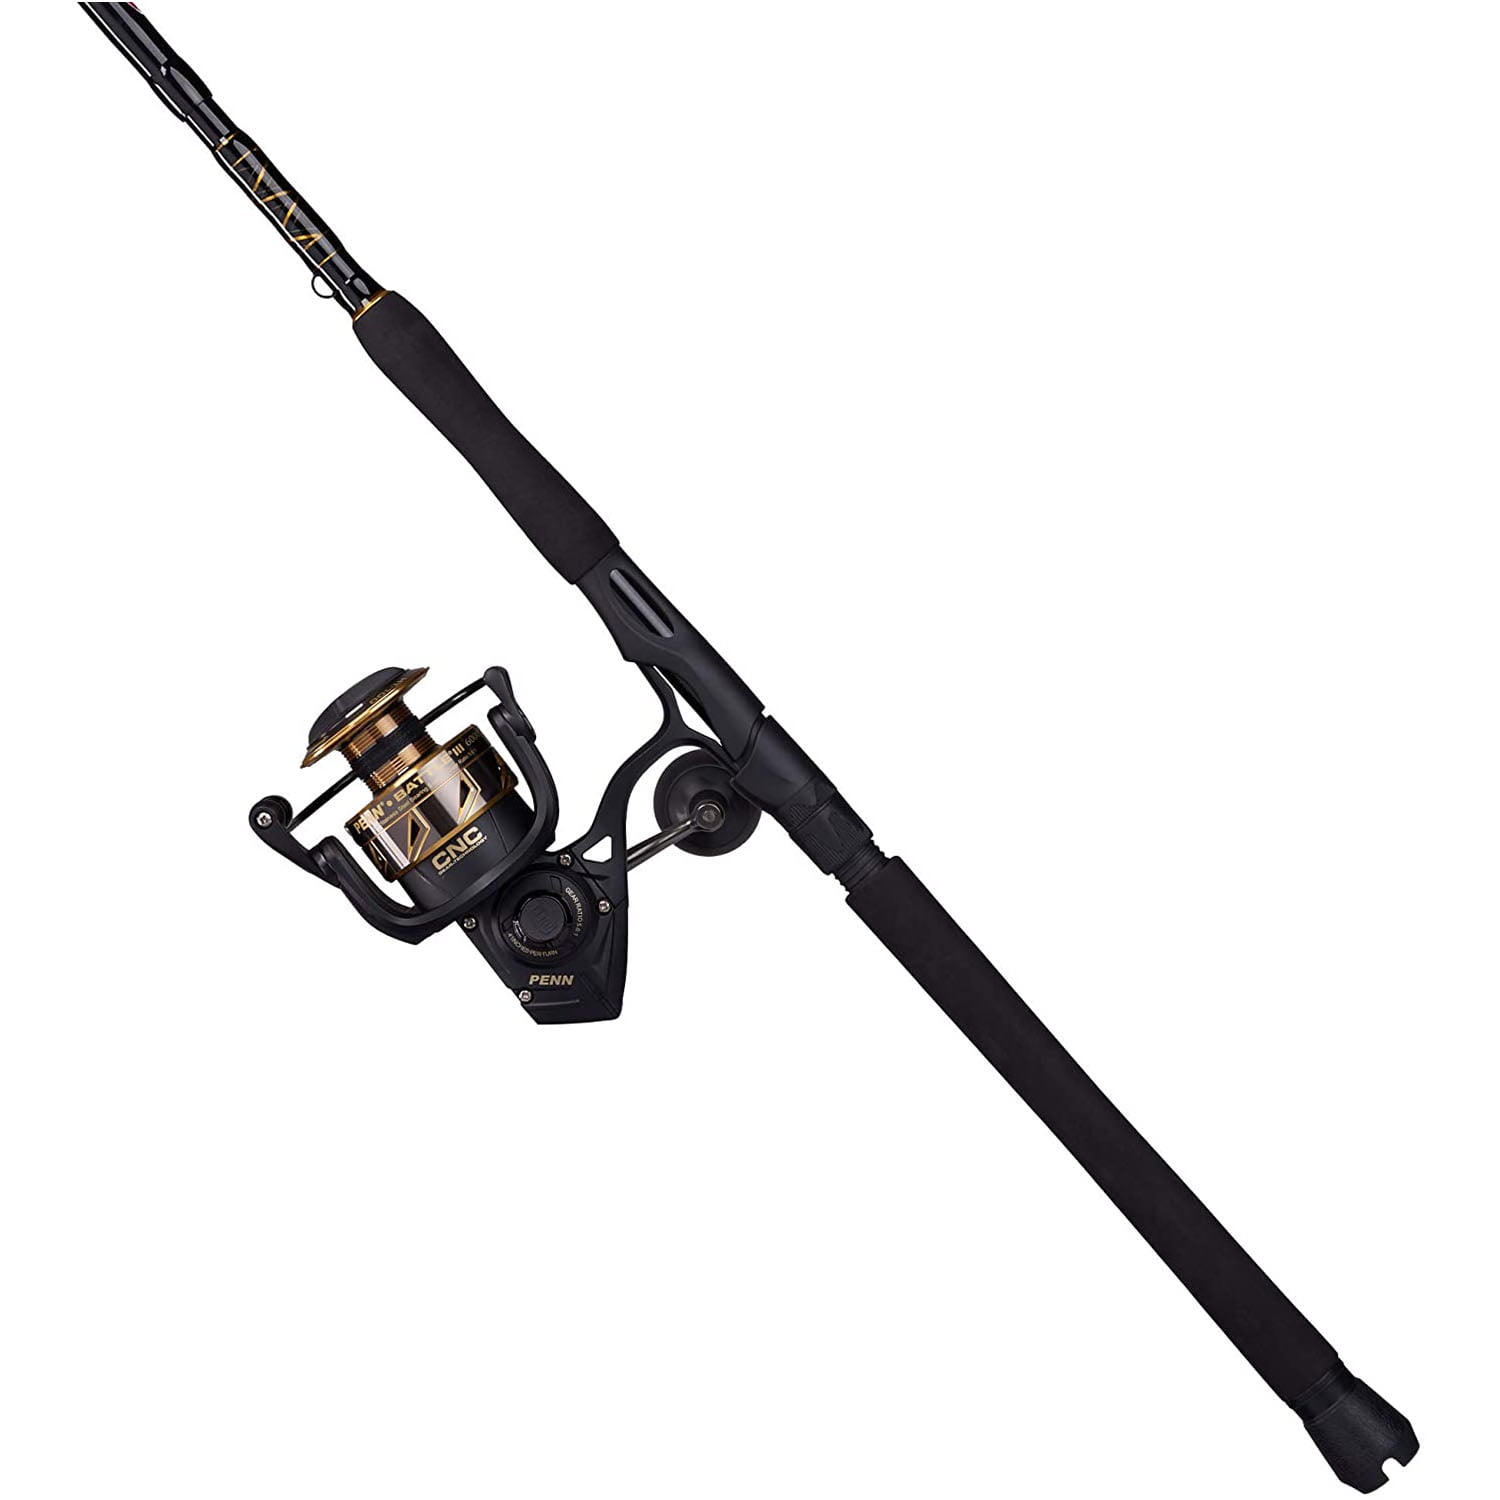 PENN 10’ Battle III Fishing Rod and Reel Spinning Combo